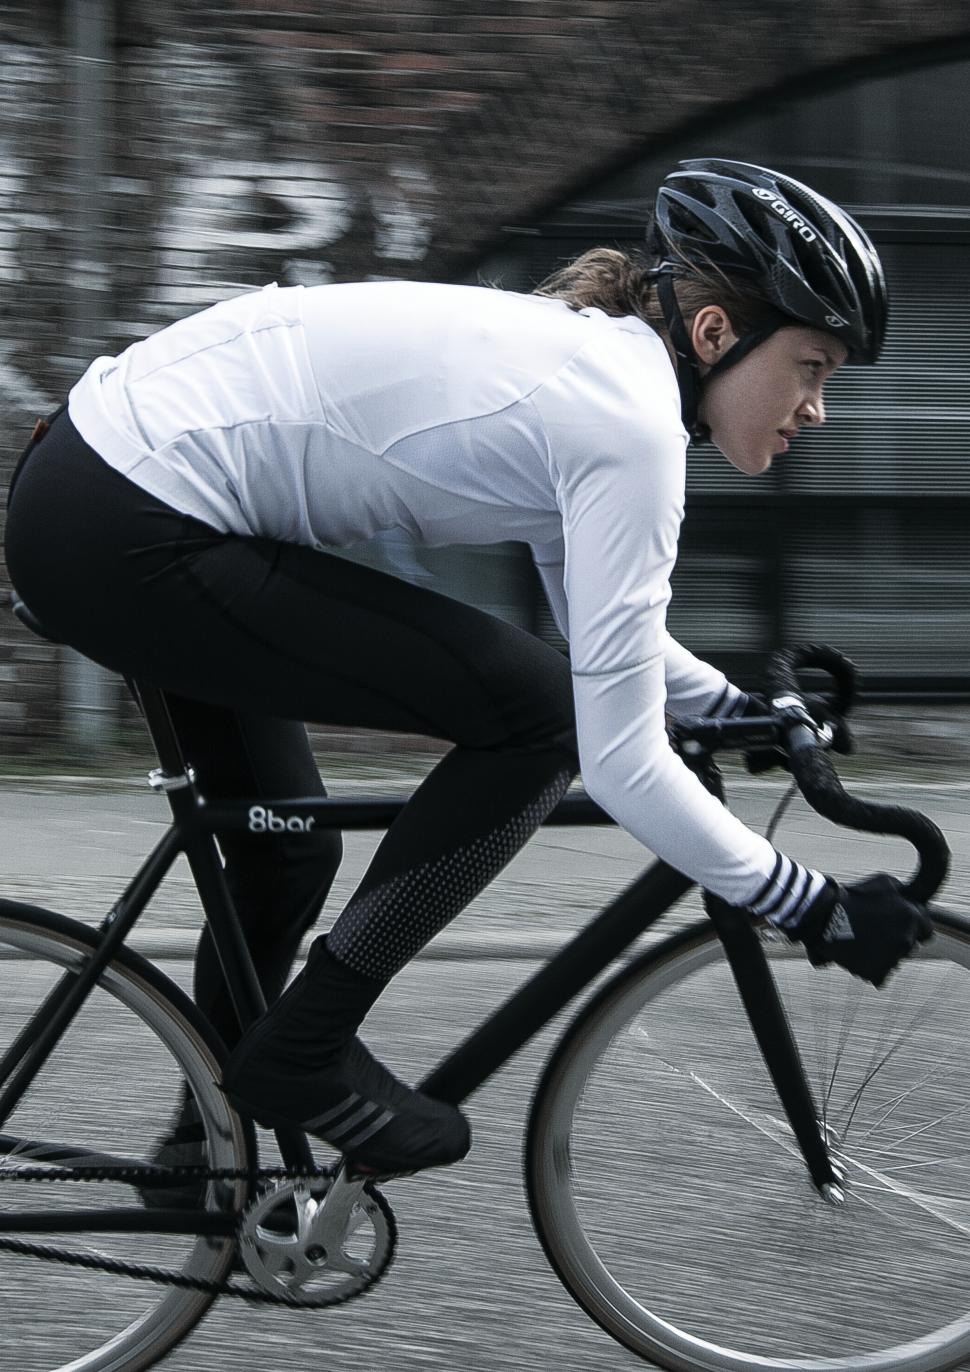 adidas cycling leggings